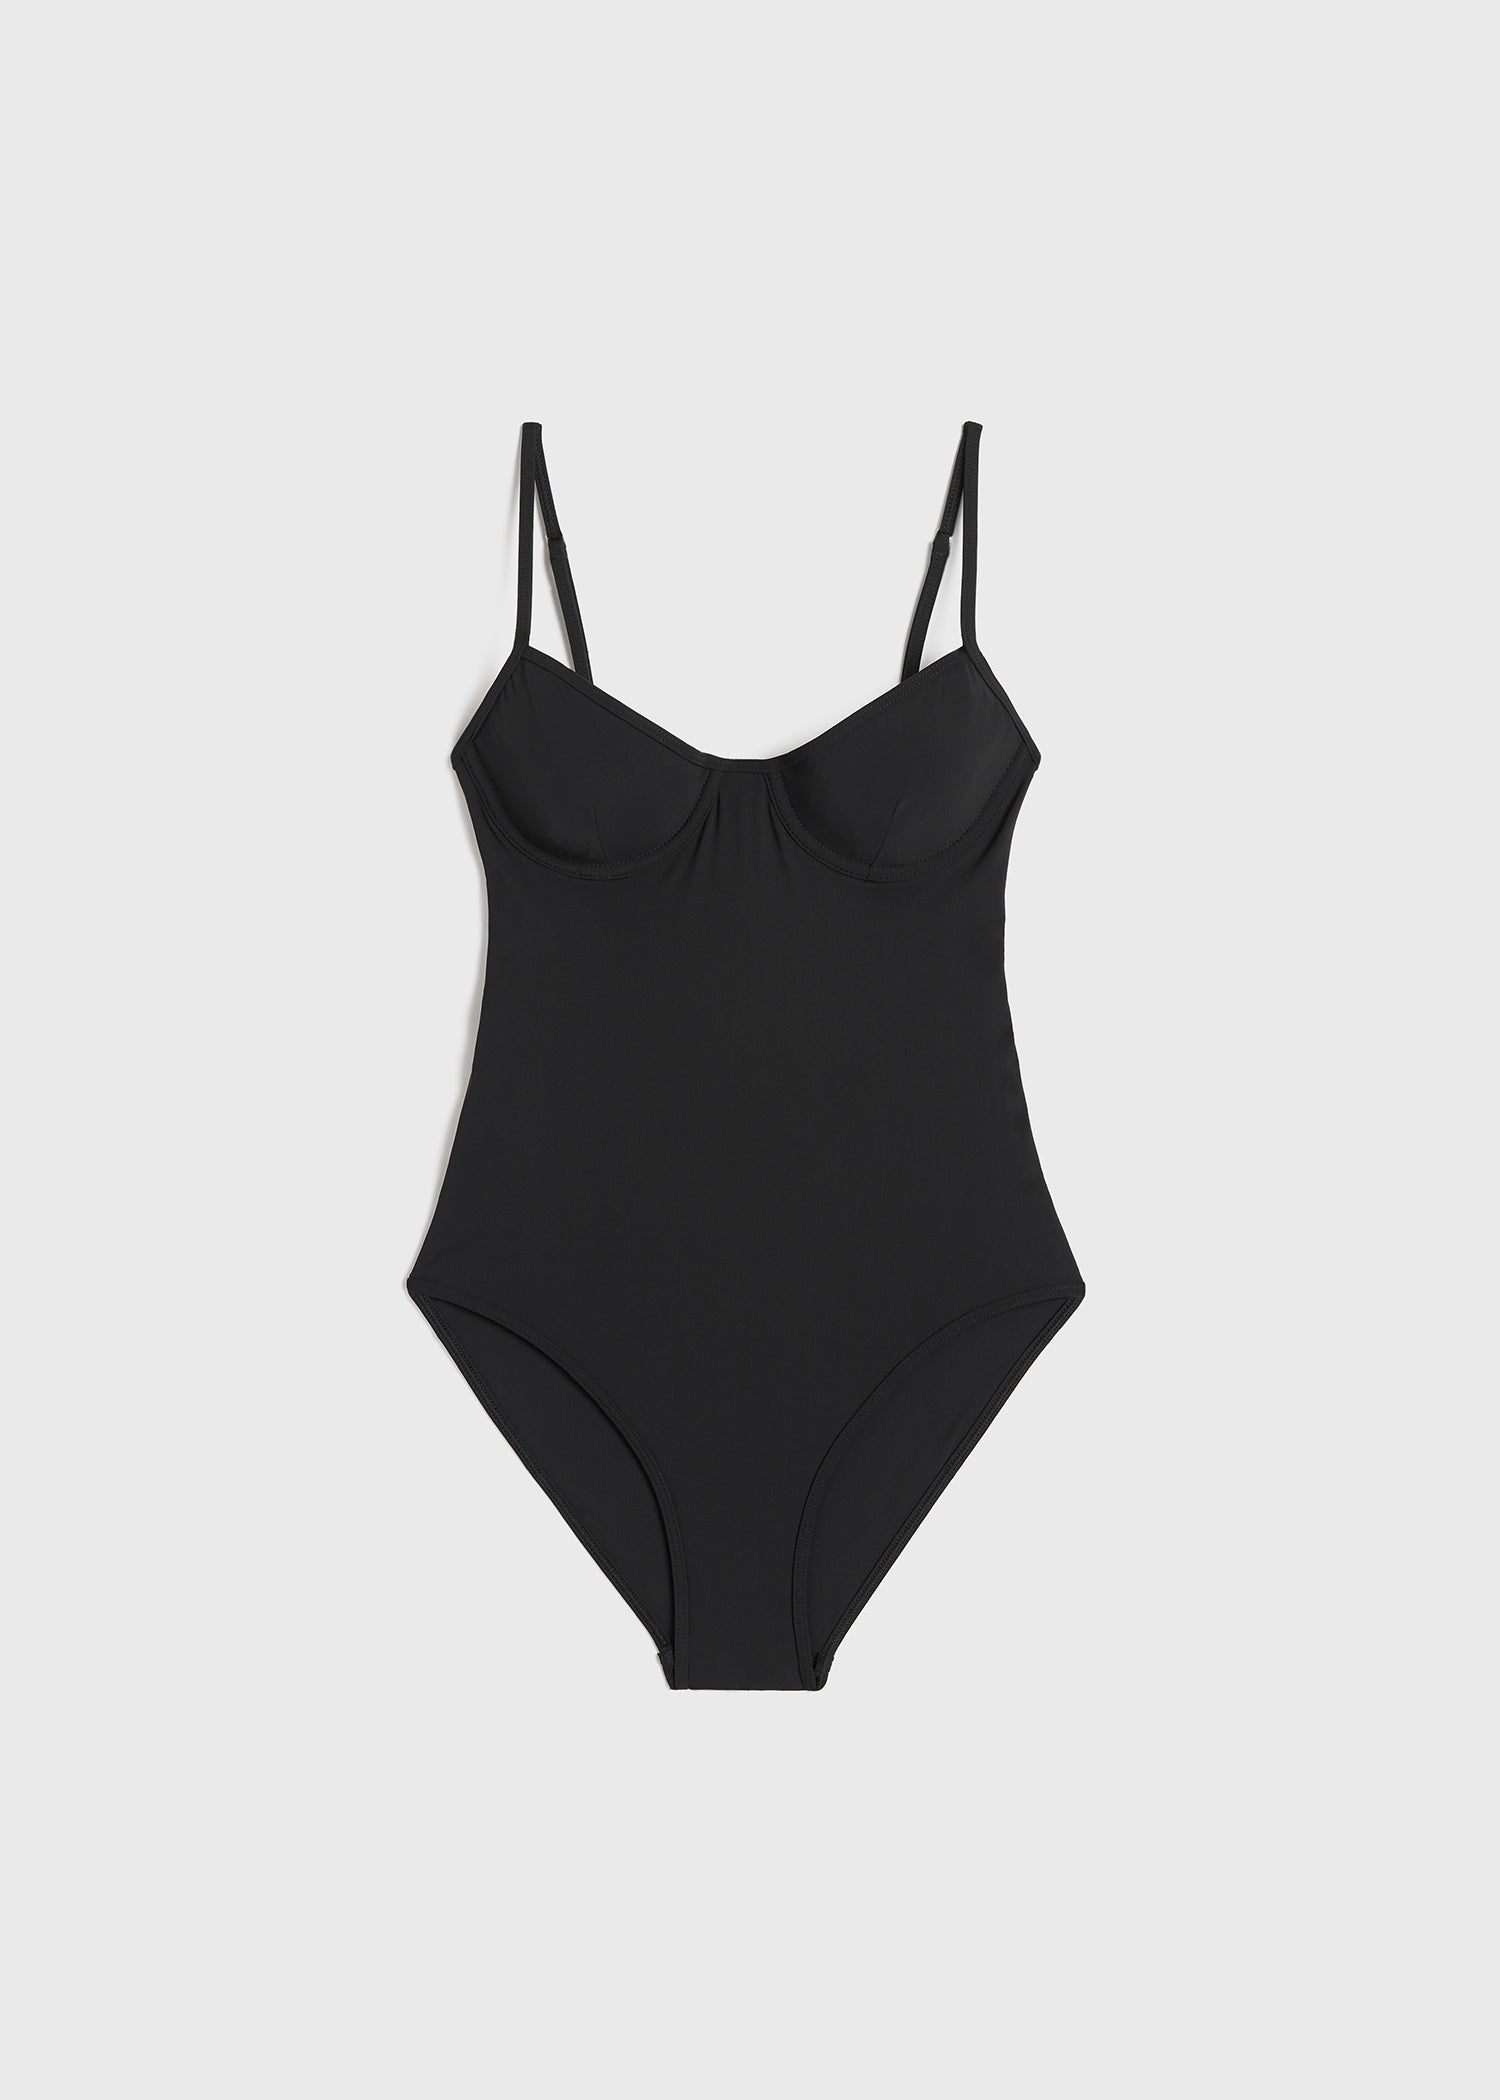 Half-cup swimsuit black - 1